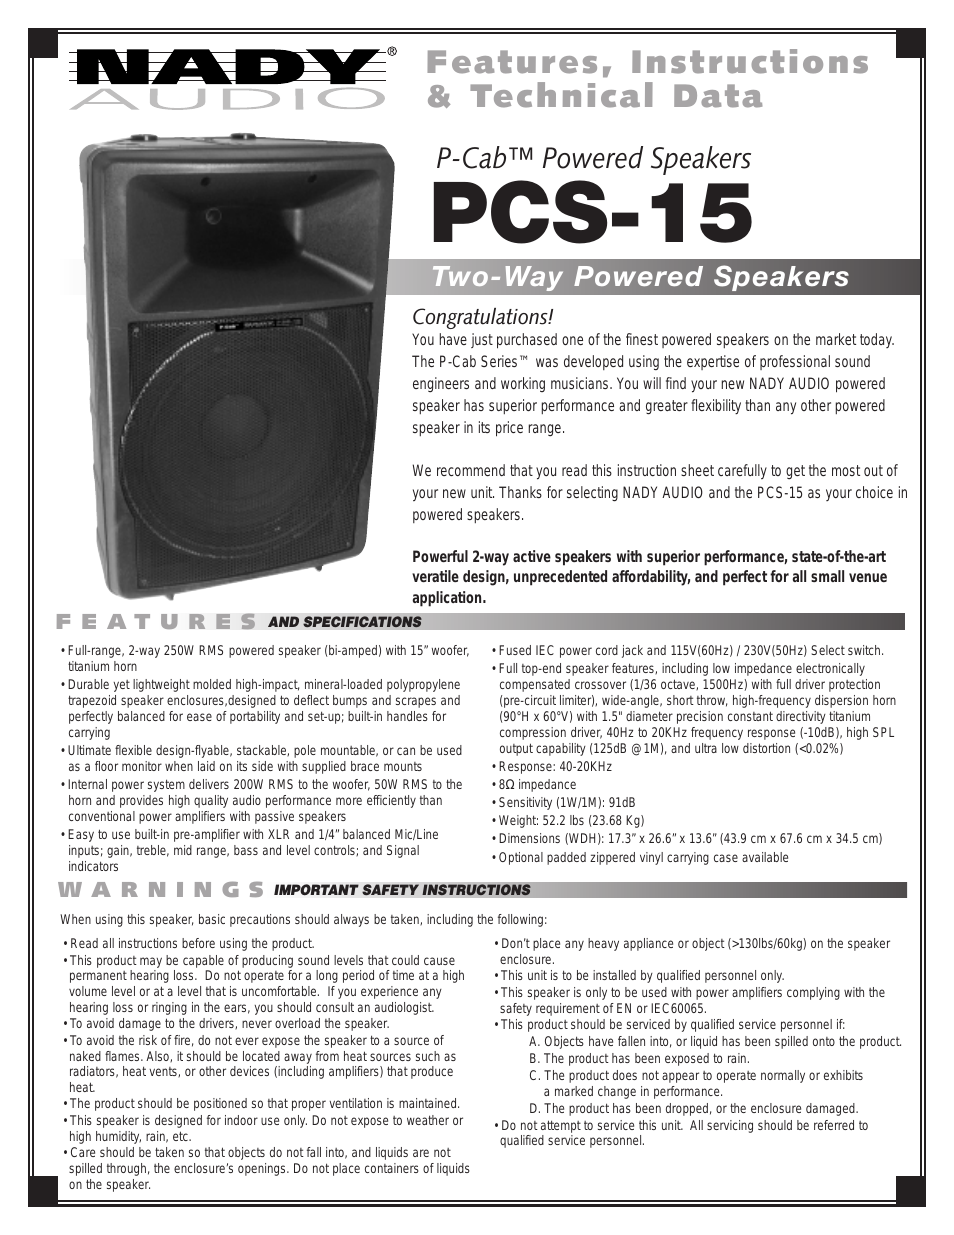 PCS-15